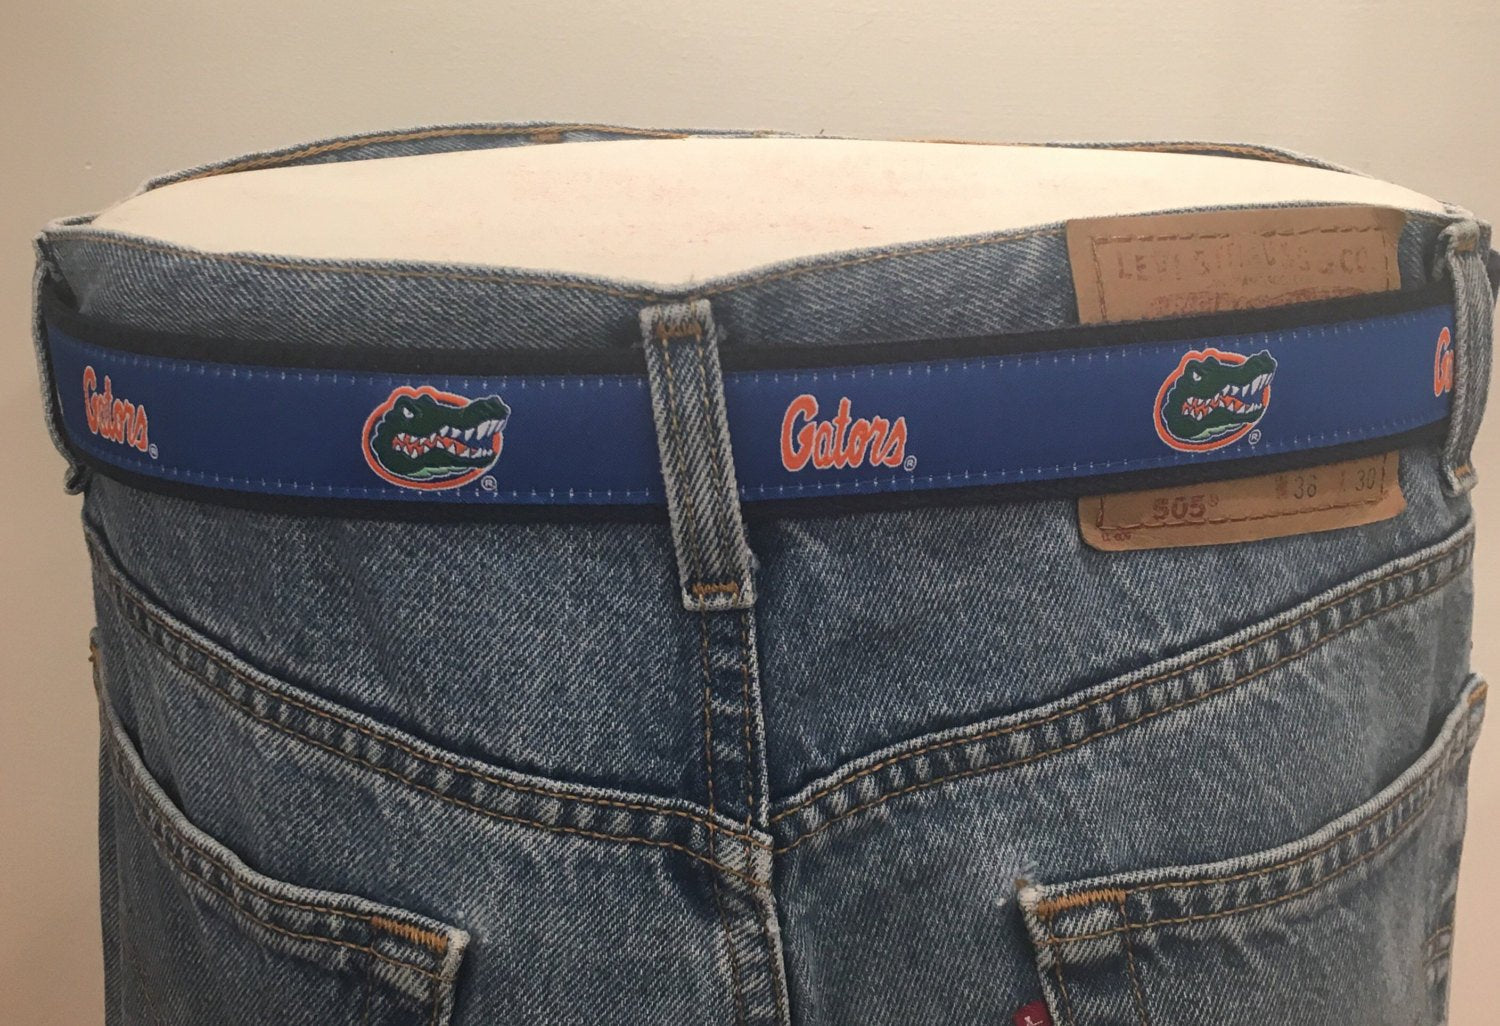 University of Florida Gators woven ribbon on Cotton Web Men's  Leather Belt